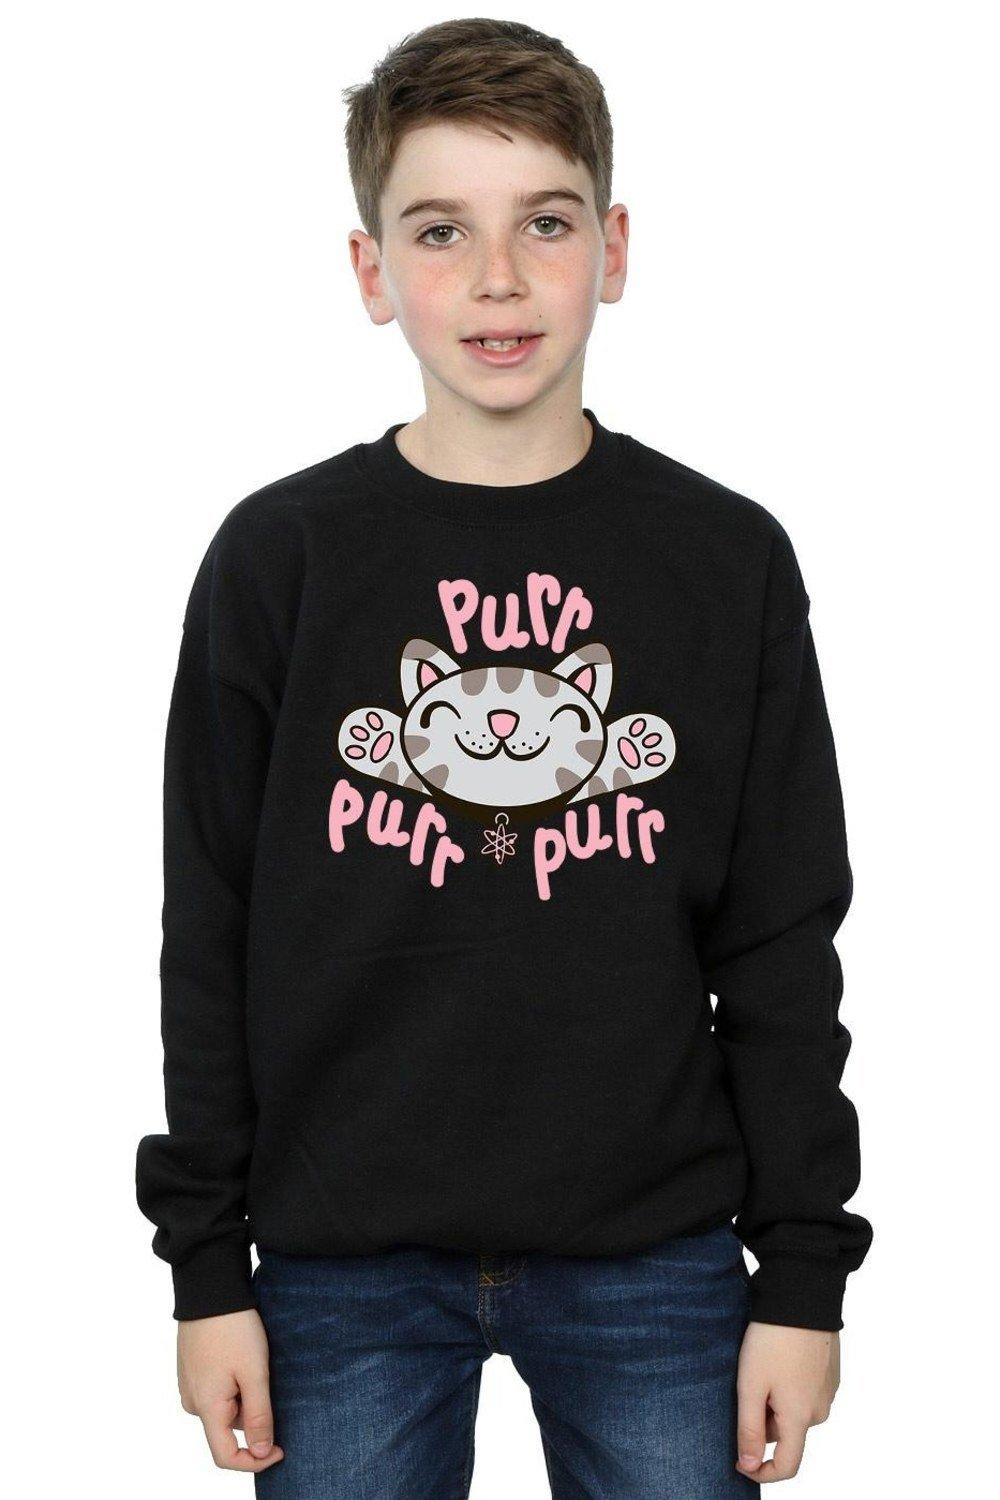 Soft Kitty Purr Sweatshirt